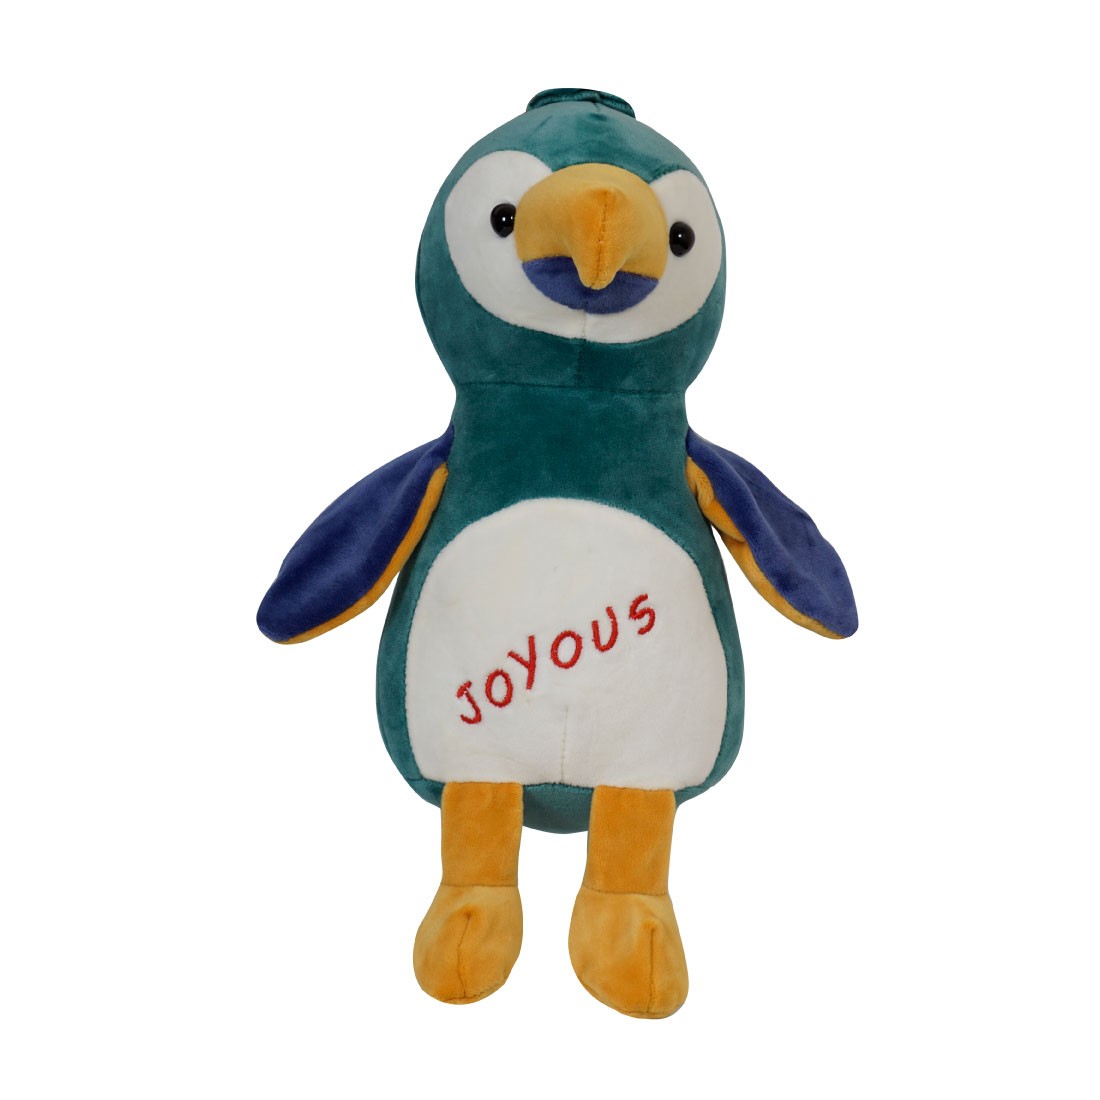 Ultra Cute Joyous Parrot Stuffed Plush Kids Soft Animal Toy 11 Inch Green